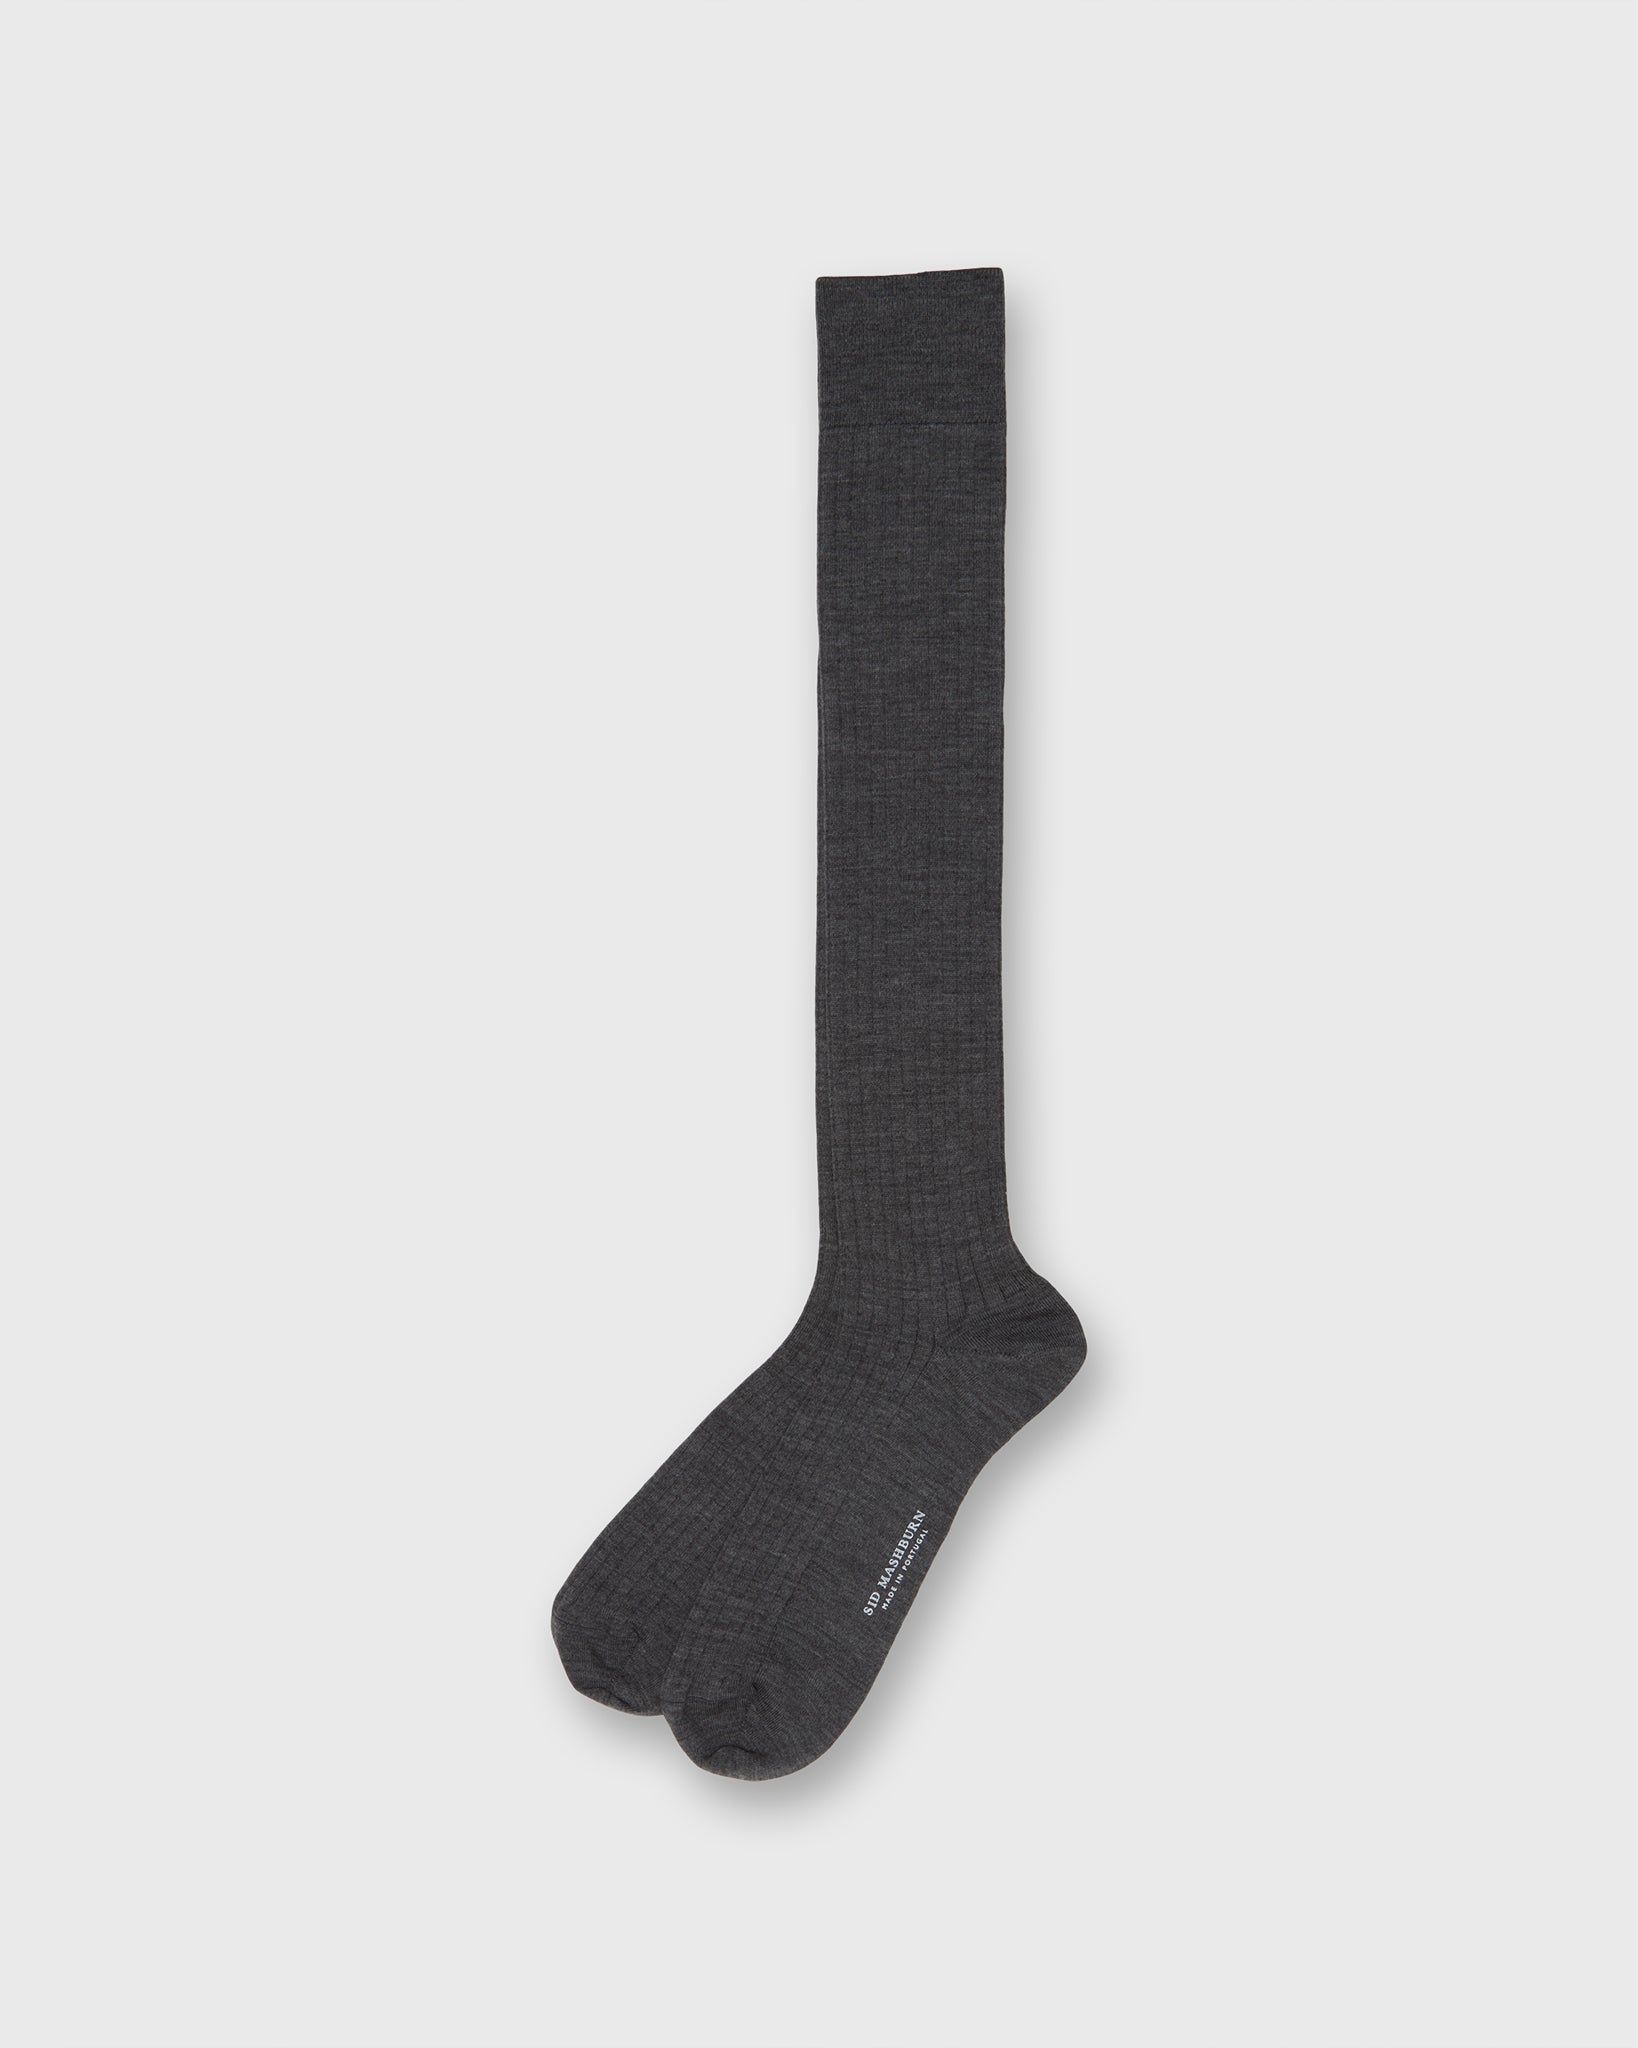 Over-The-Calf Dress Socks in Heather Grey Extra Fine Merino